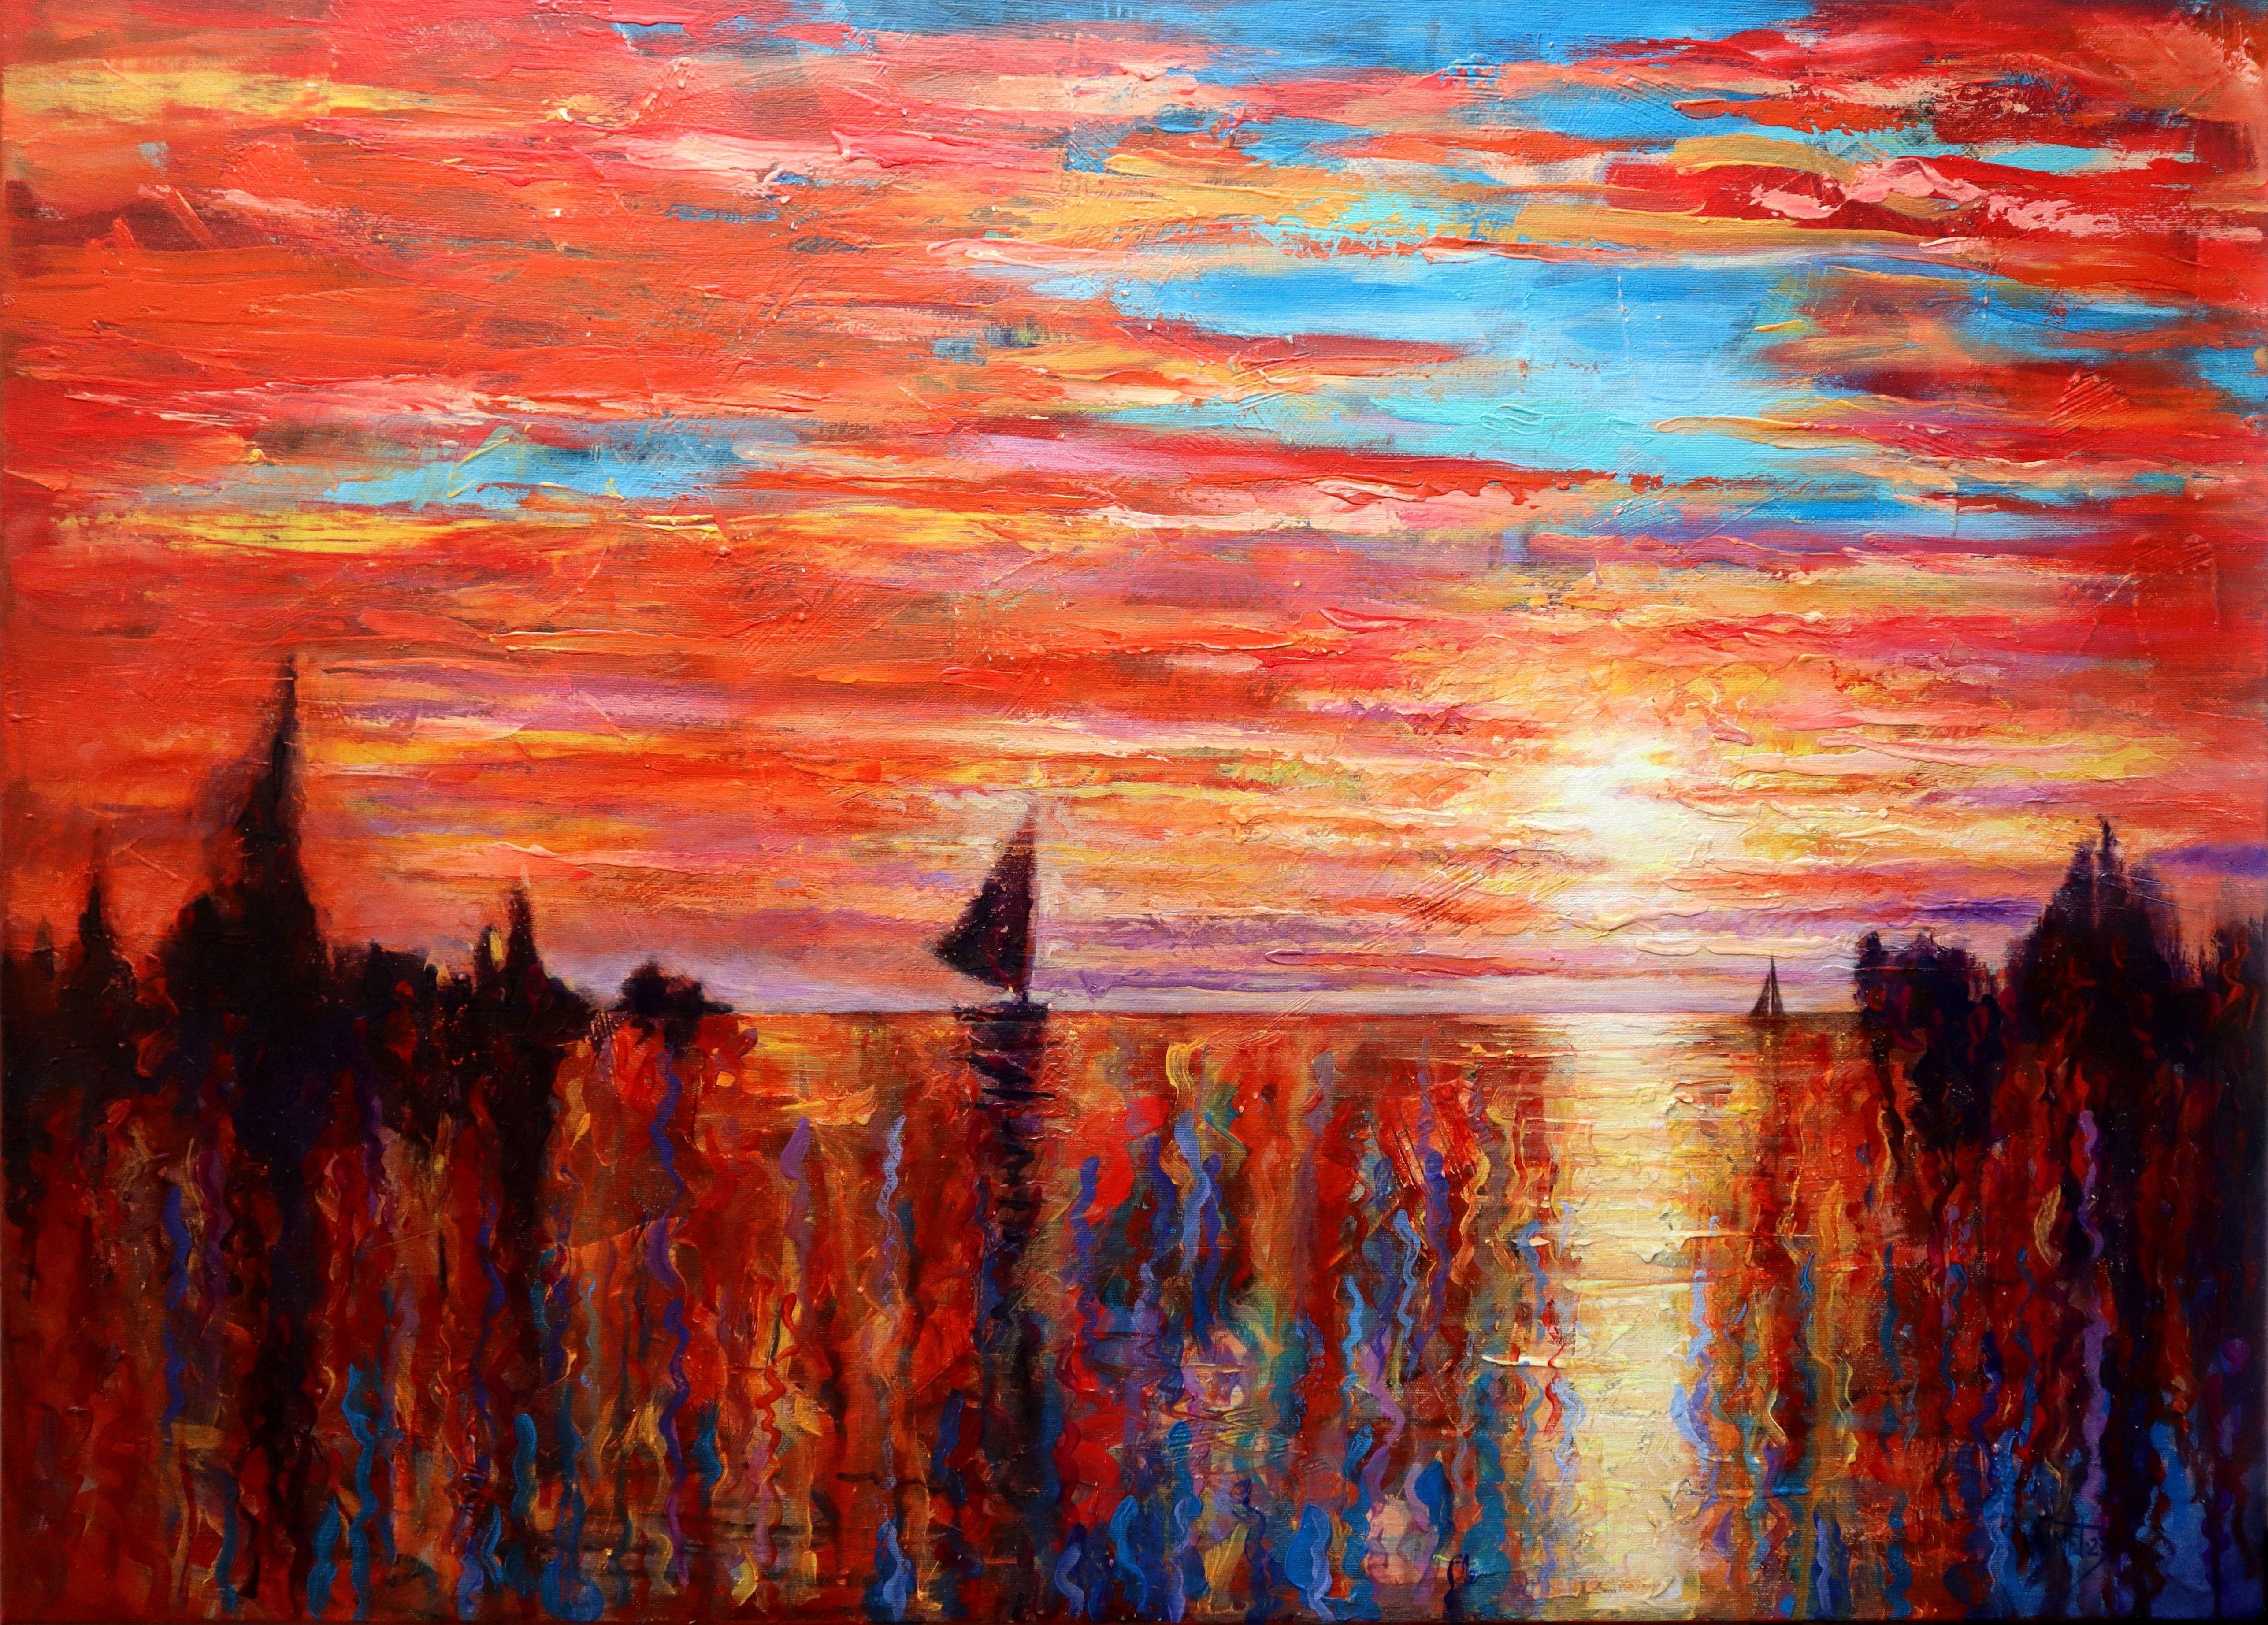 Morgenspaziergang am Meer – Painting von RAKHMET REDZHEPOV (RAMZI)